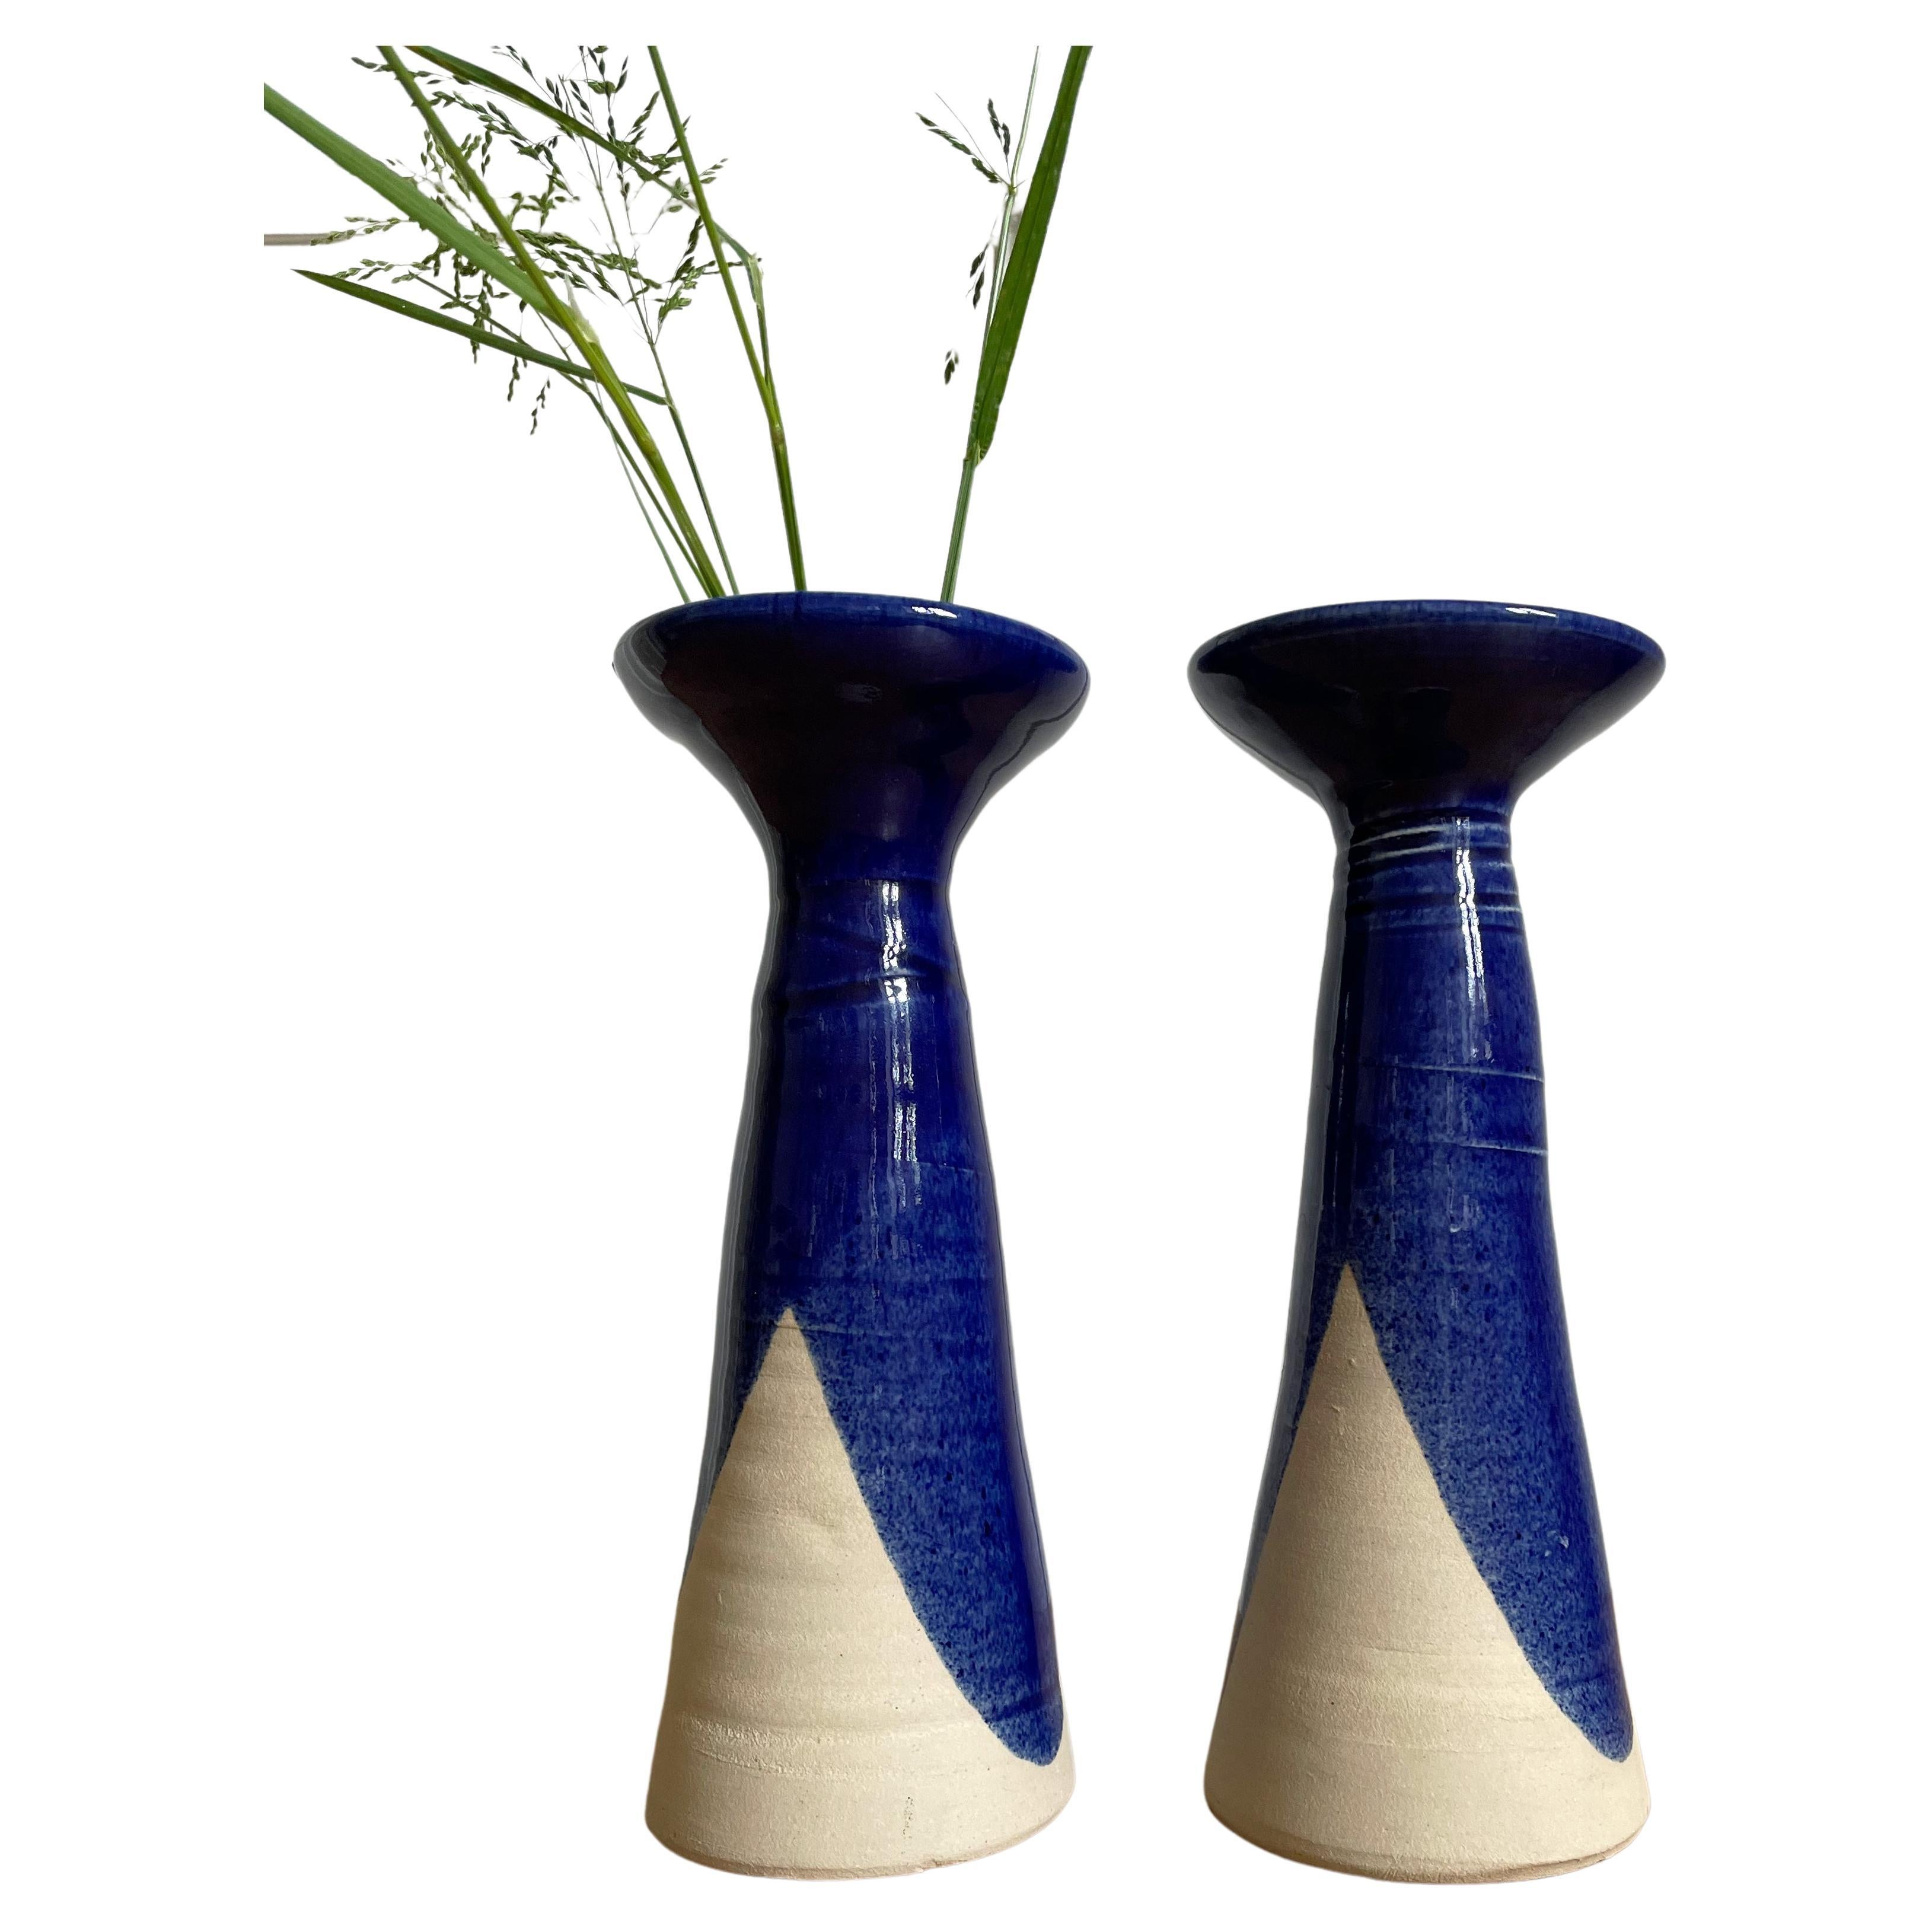 Set of Blue Glazed Ceramic Vases, Candle Sticks, 1980s